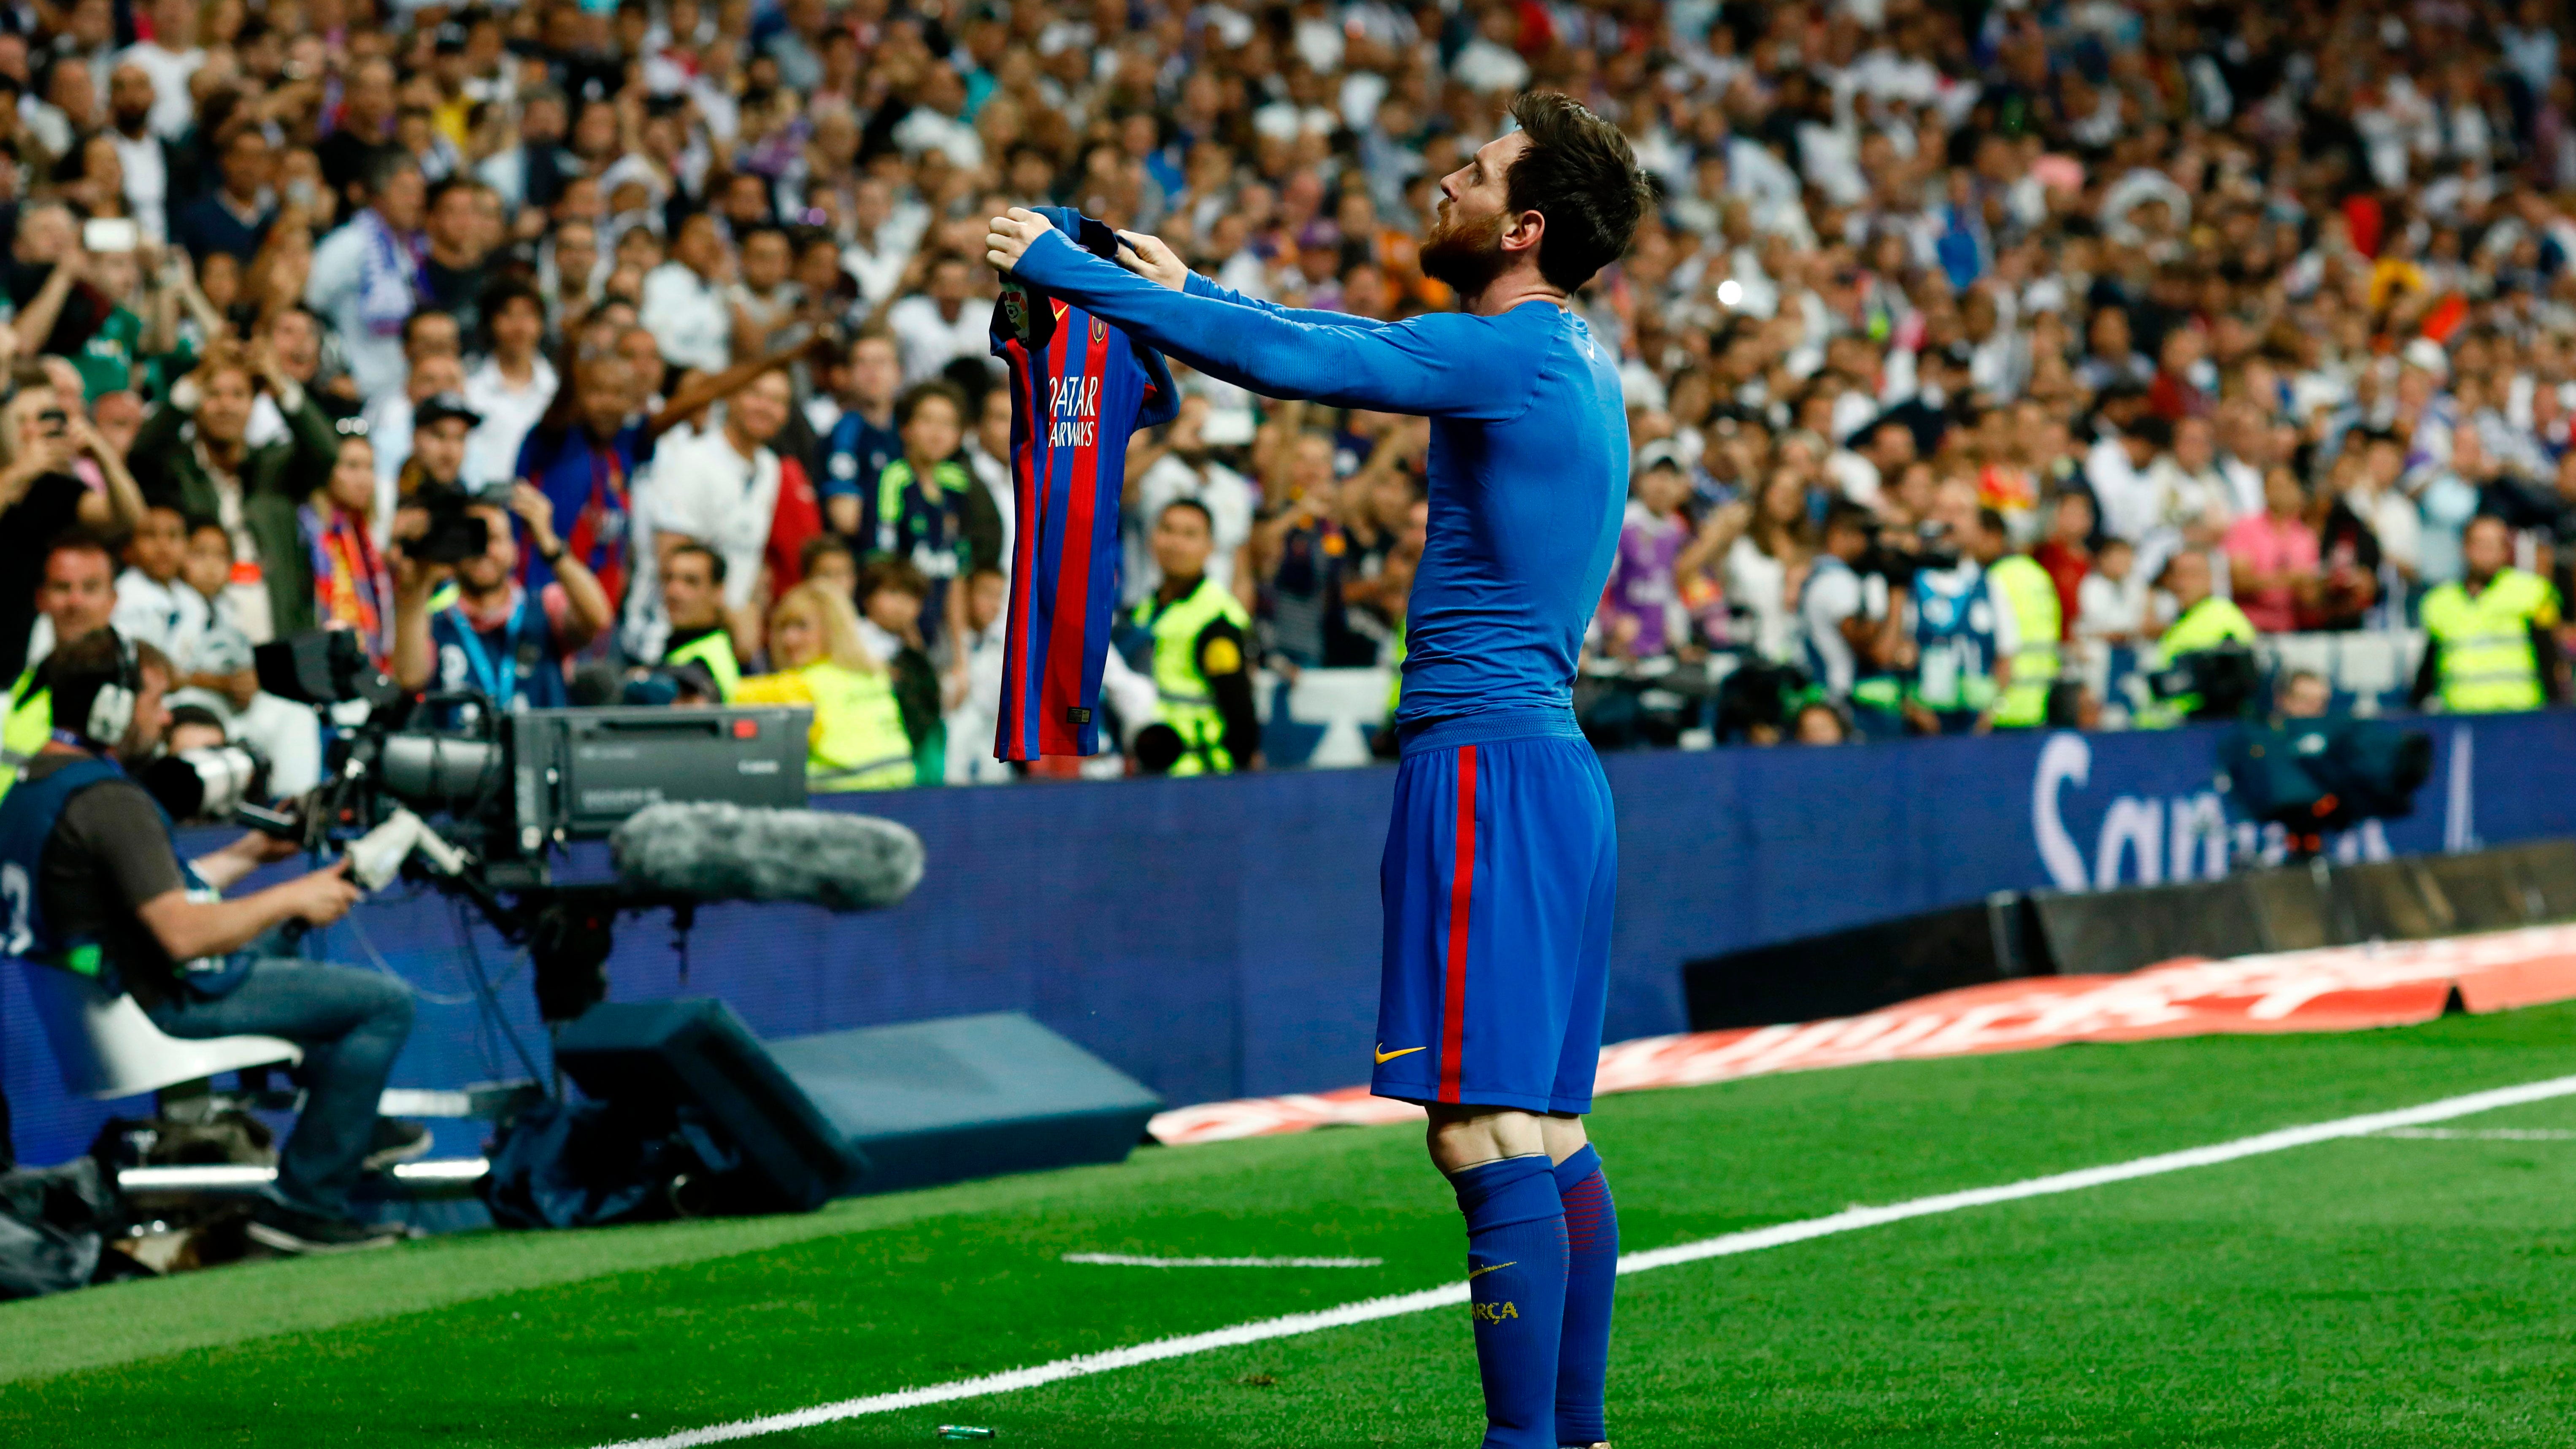 Lionel Messi Barcelona Real Madrid